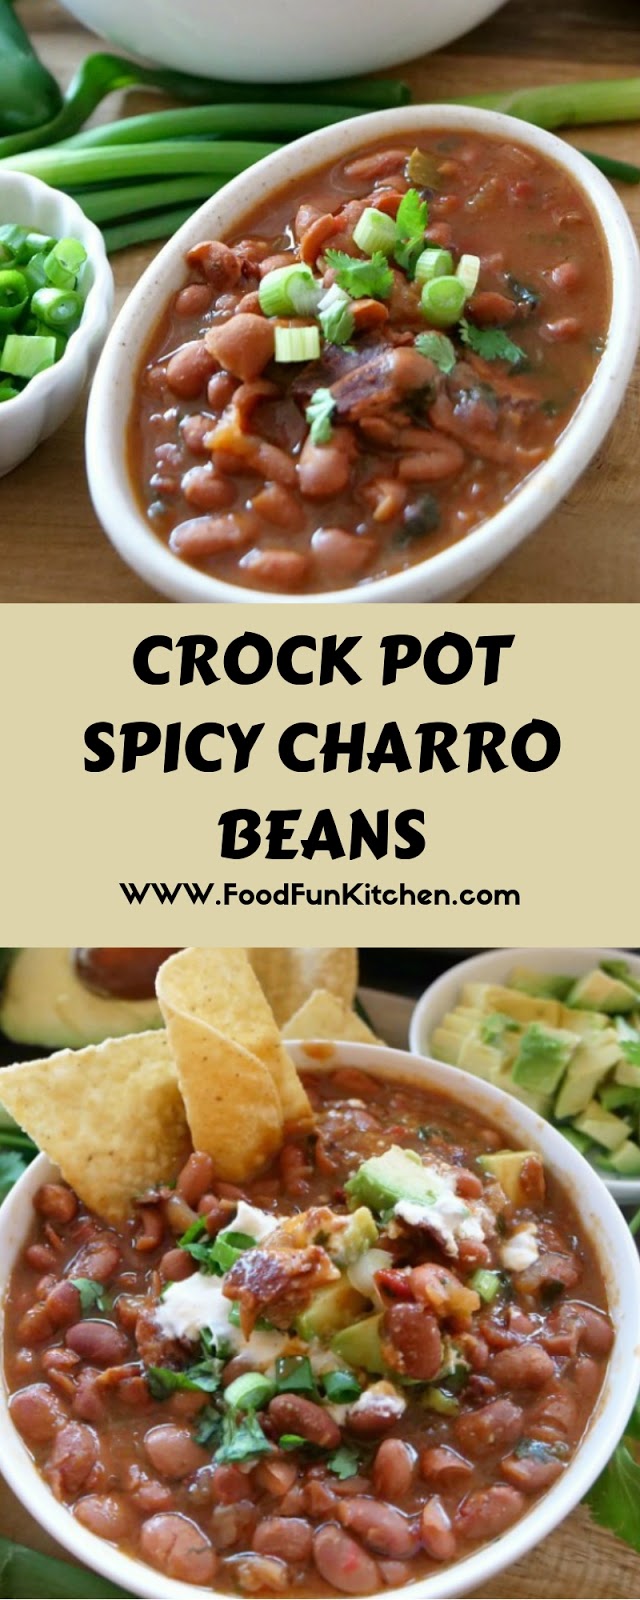 CROCK POT SPICY CHARRO BEANS - Food Fun Kitchen